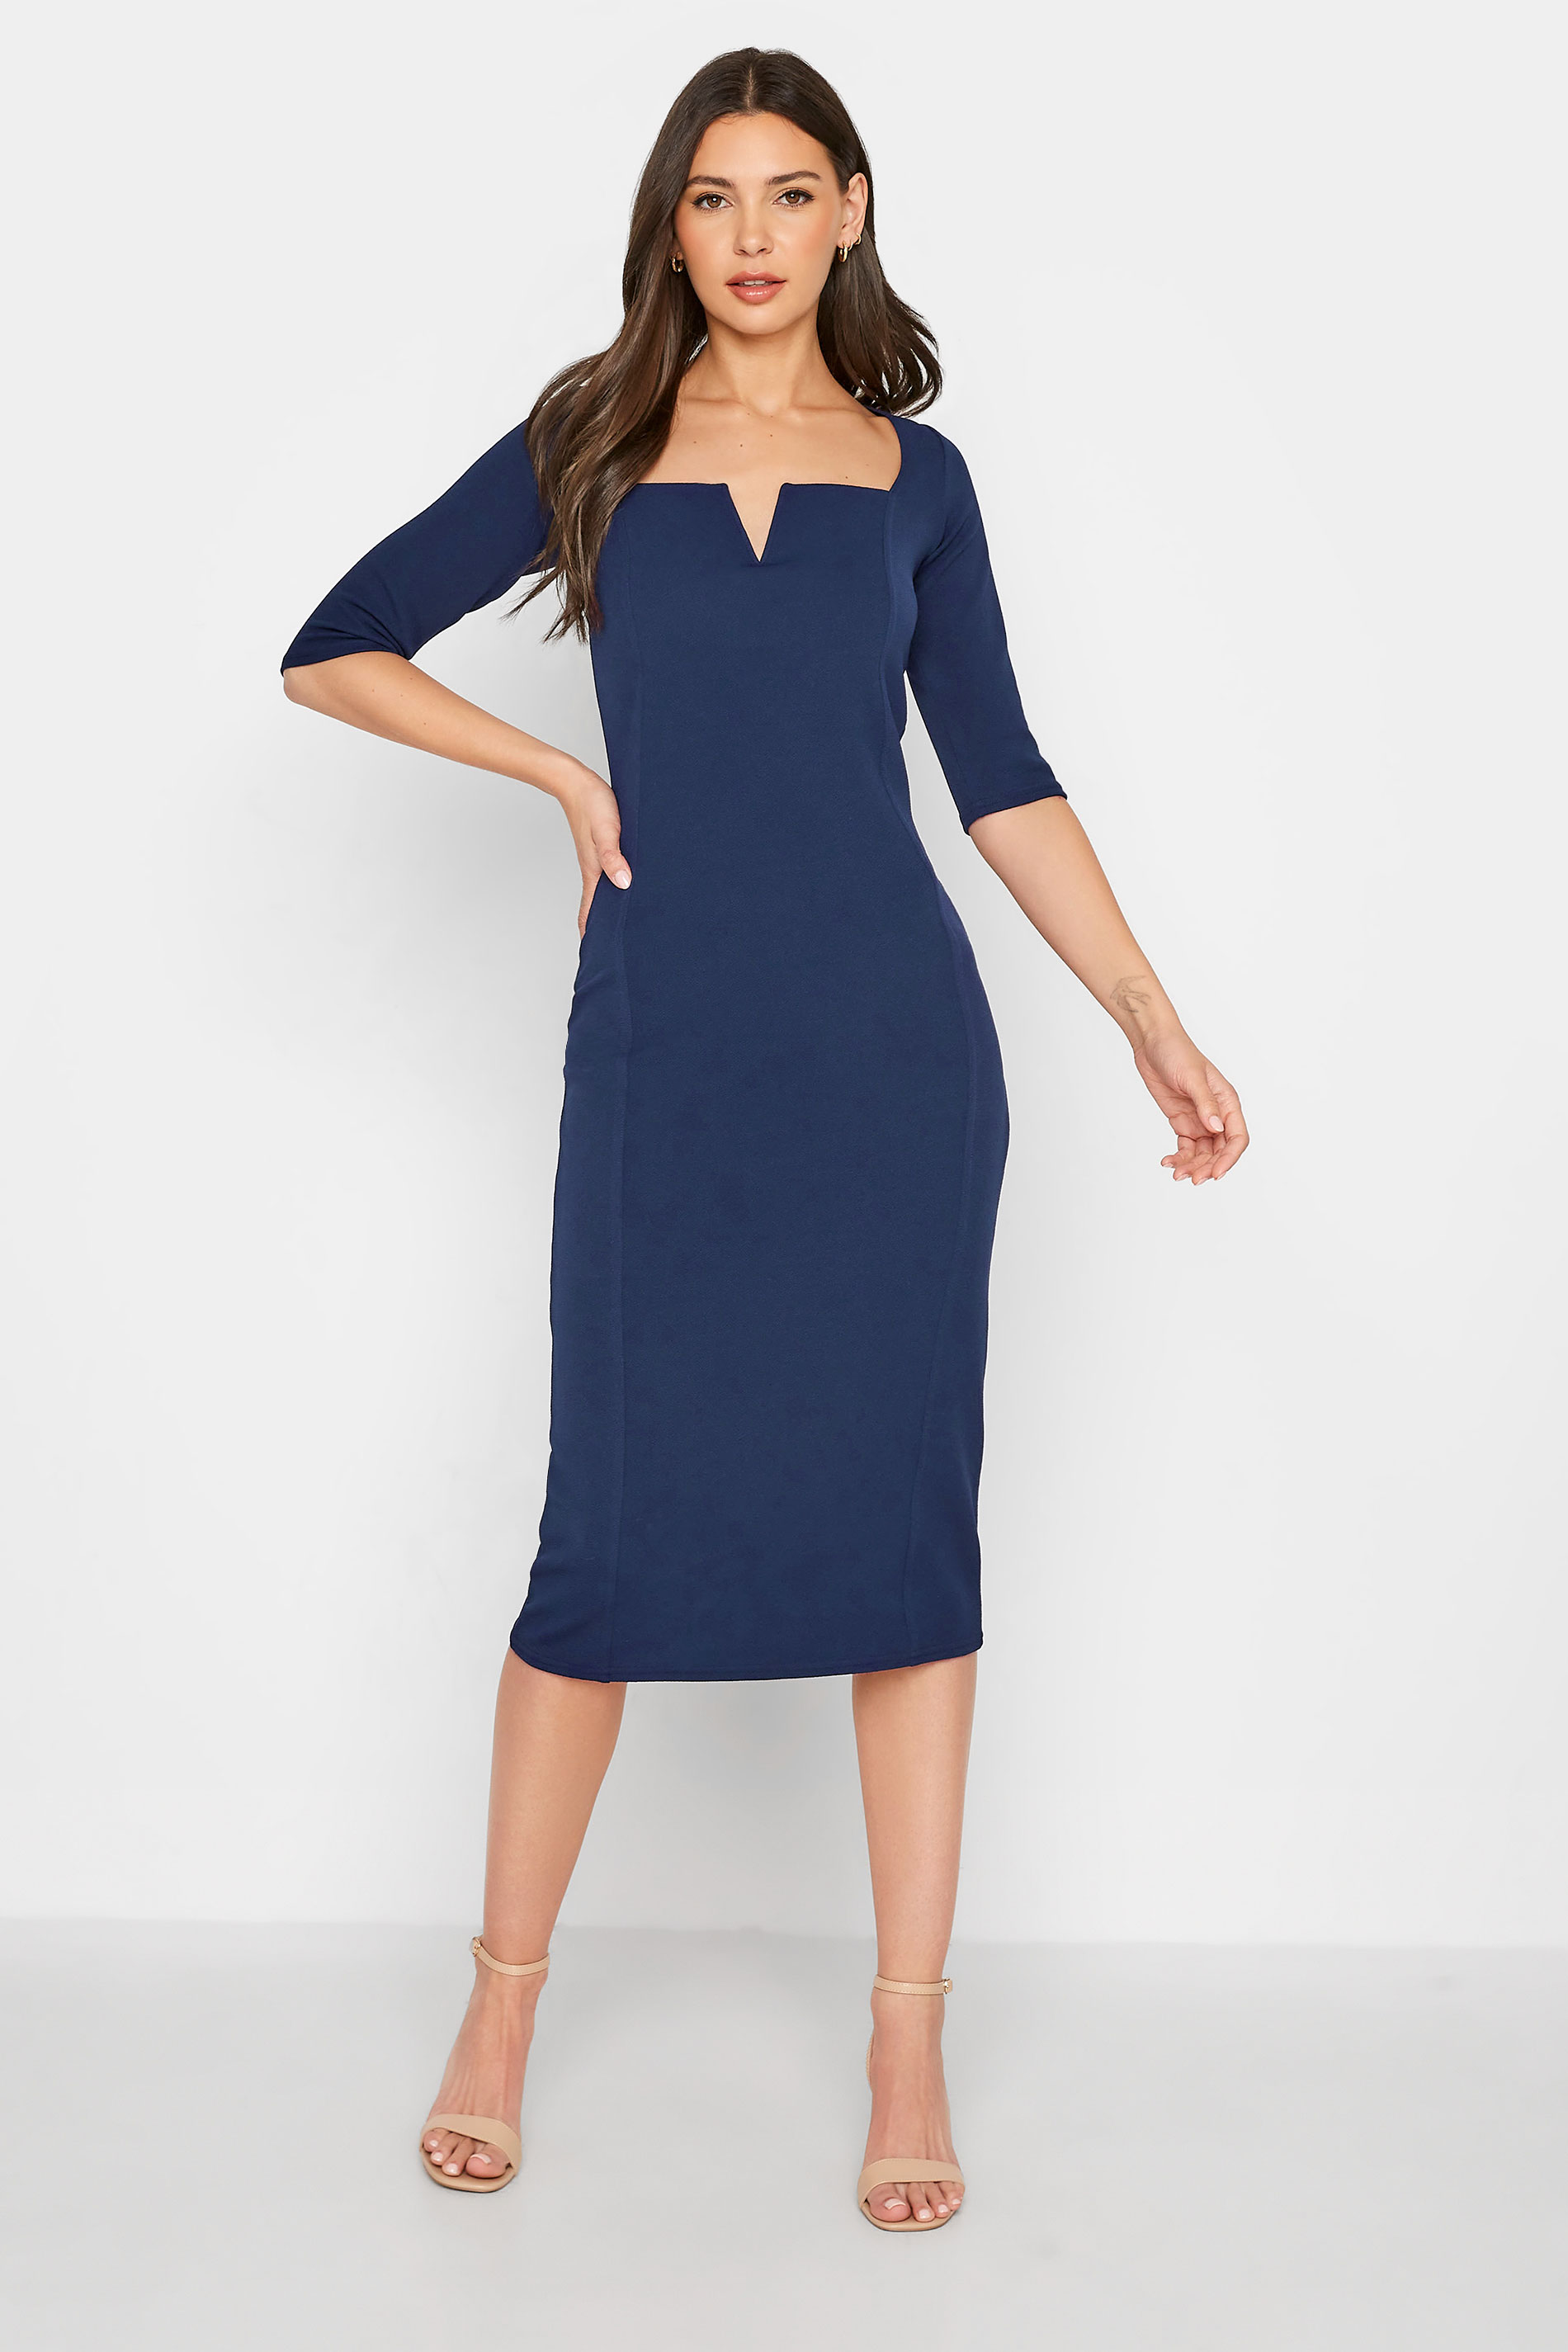 Tall Women's LTS Navy Blue Notch Neck Midi Dress | Long Tall Sally 1